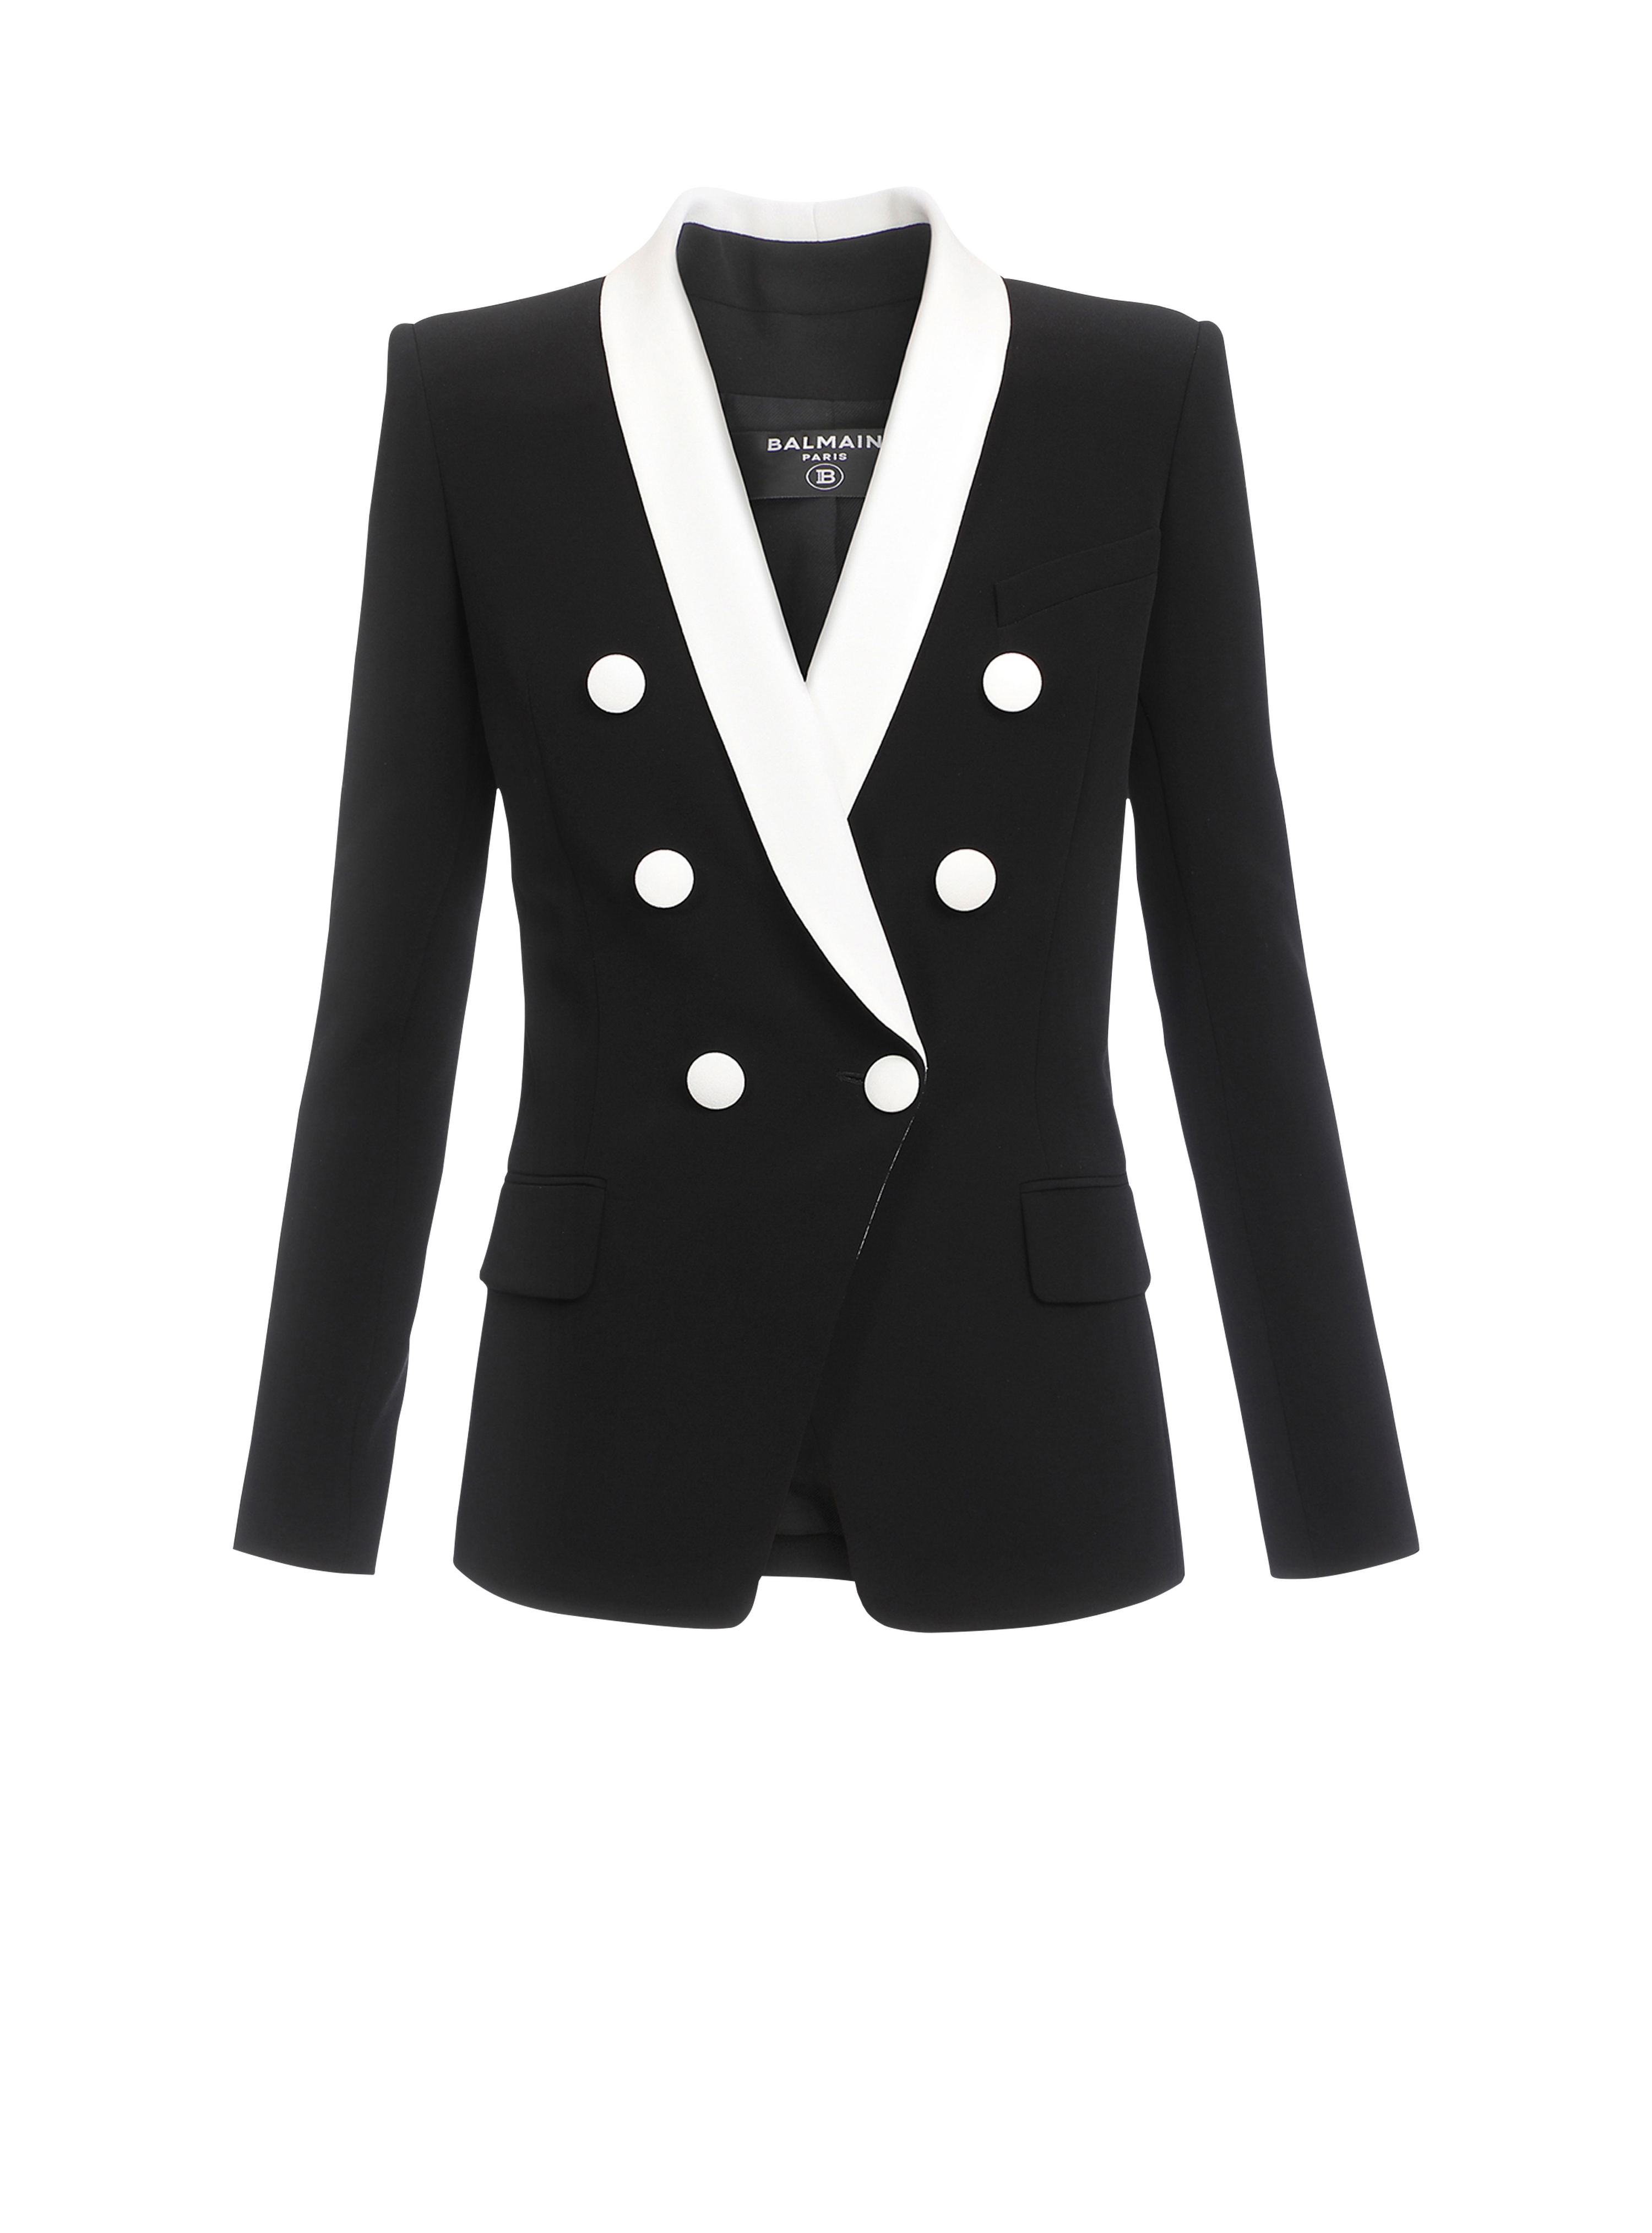 Bicolor crêpe double-breasted jacket, black, hi-res